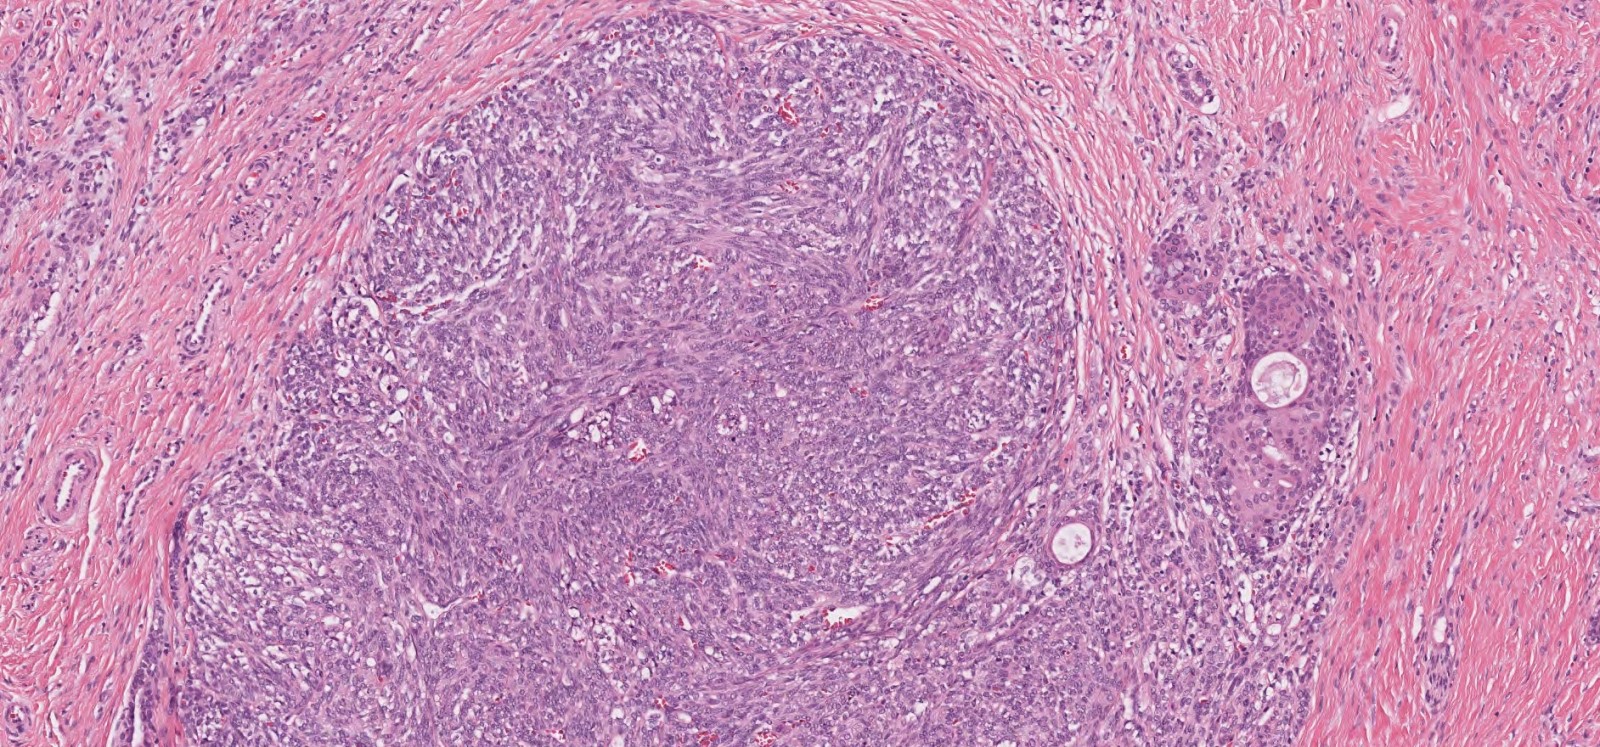 Salivary gland anlage tumor